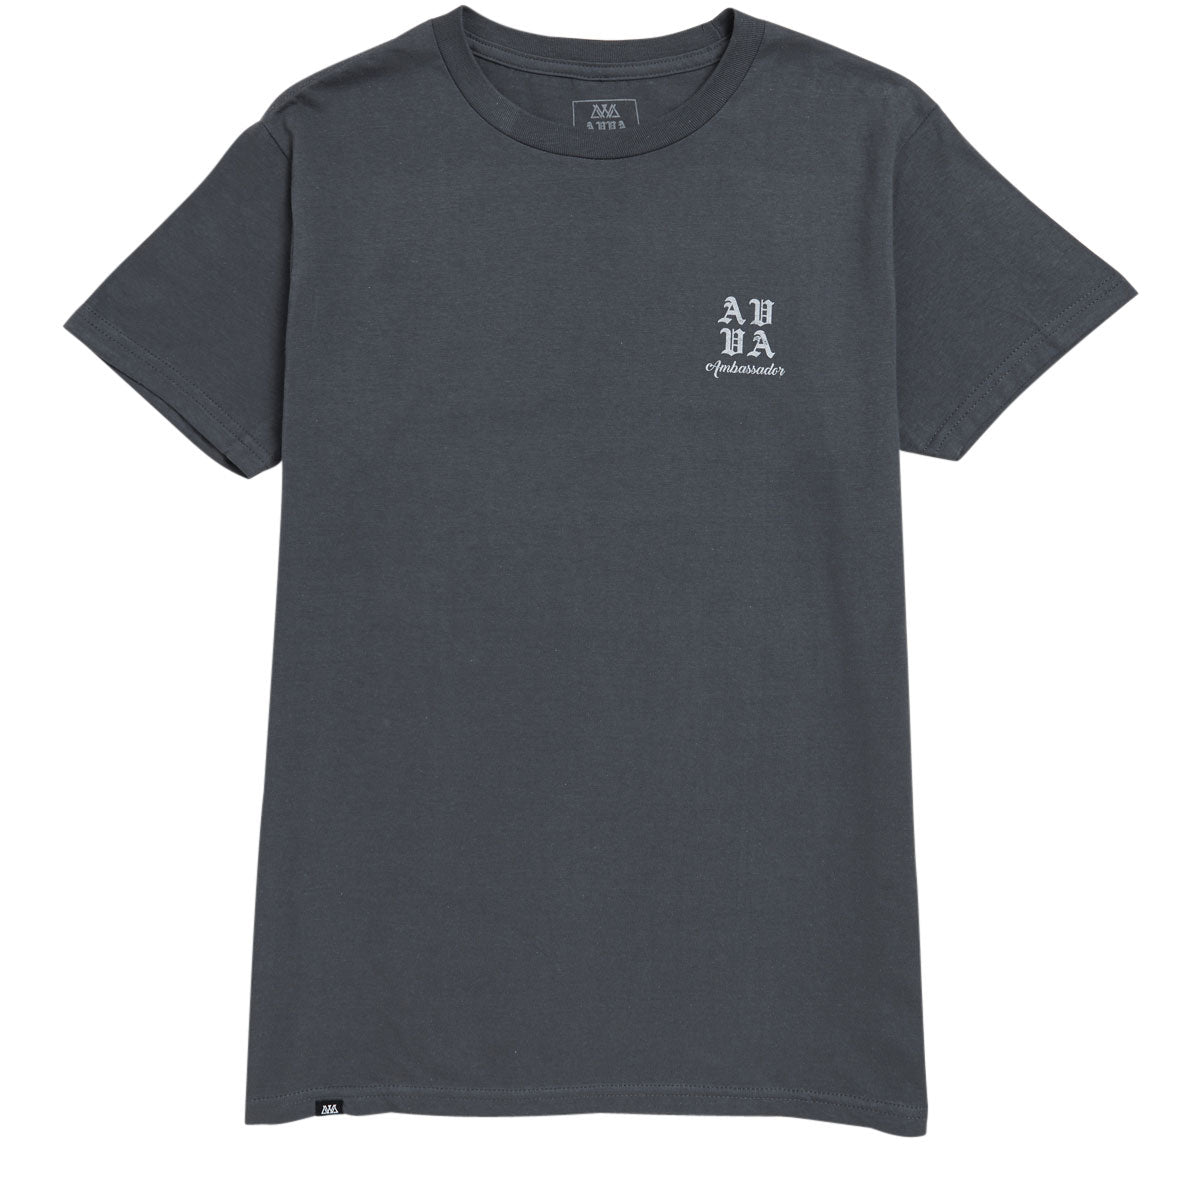 AVVA Invader T-Shirt - Charcoal Grey image 2